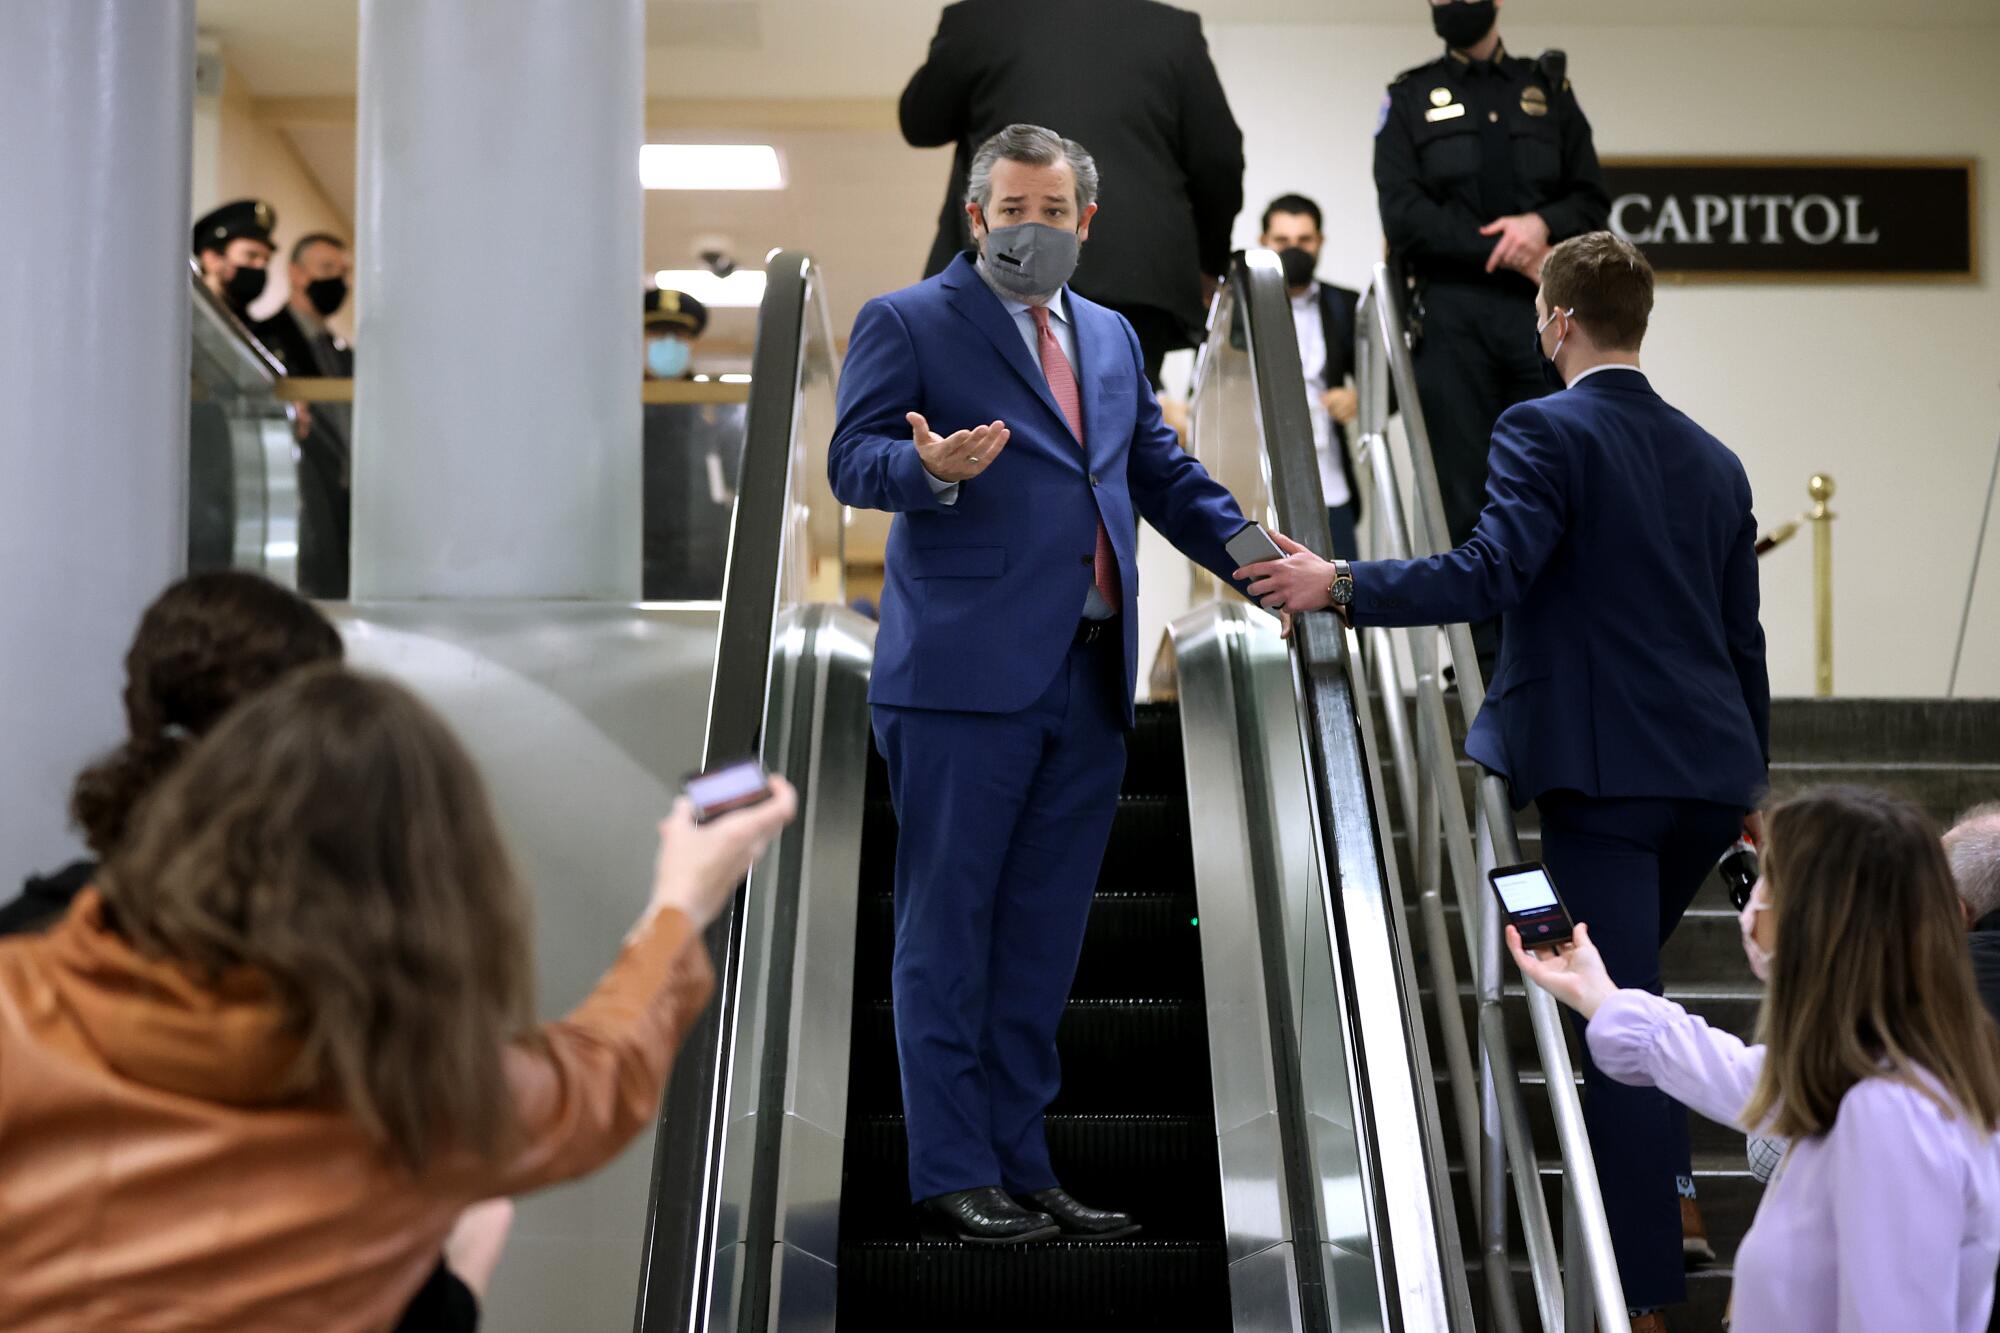 Ted Cruz on an escalator